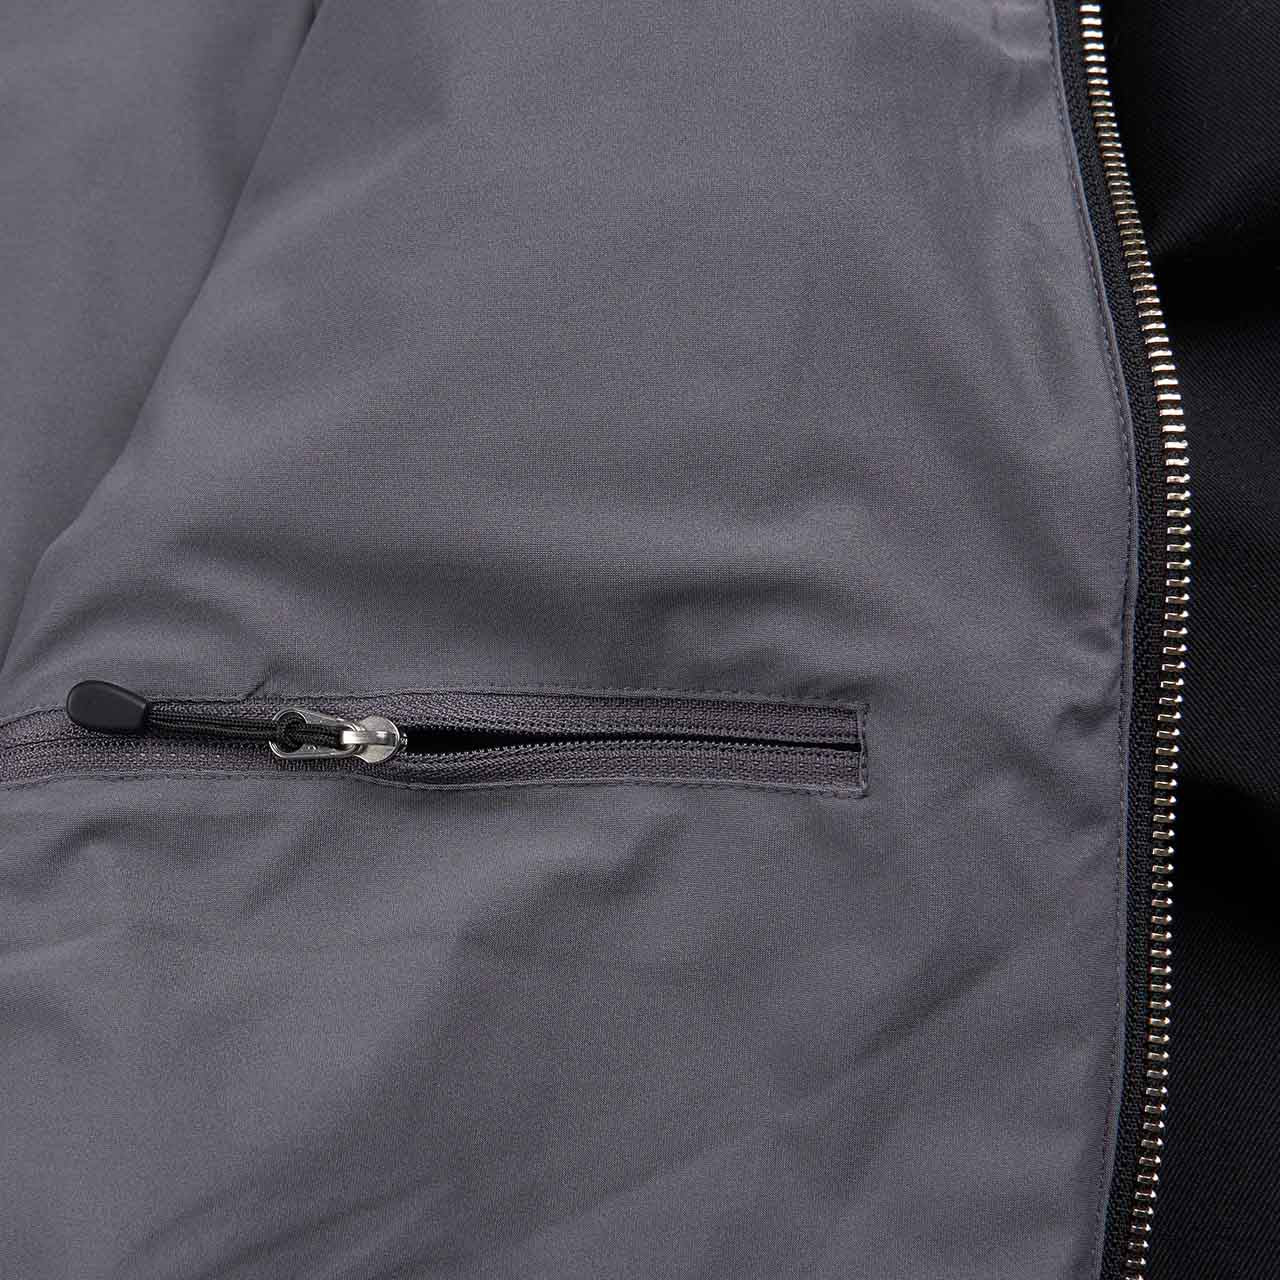 nanamica gore-tex infinium chino crew jacket (schwarz)